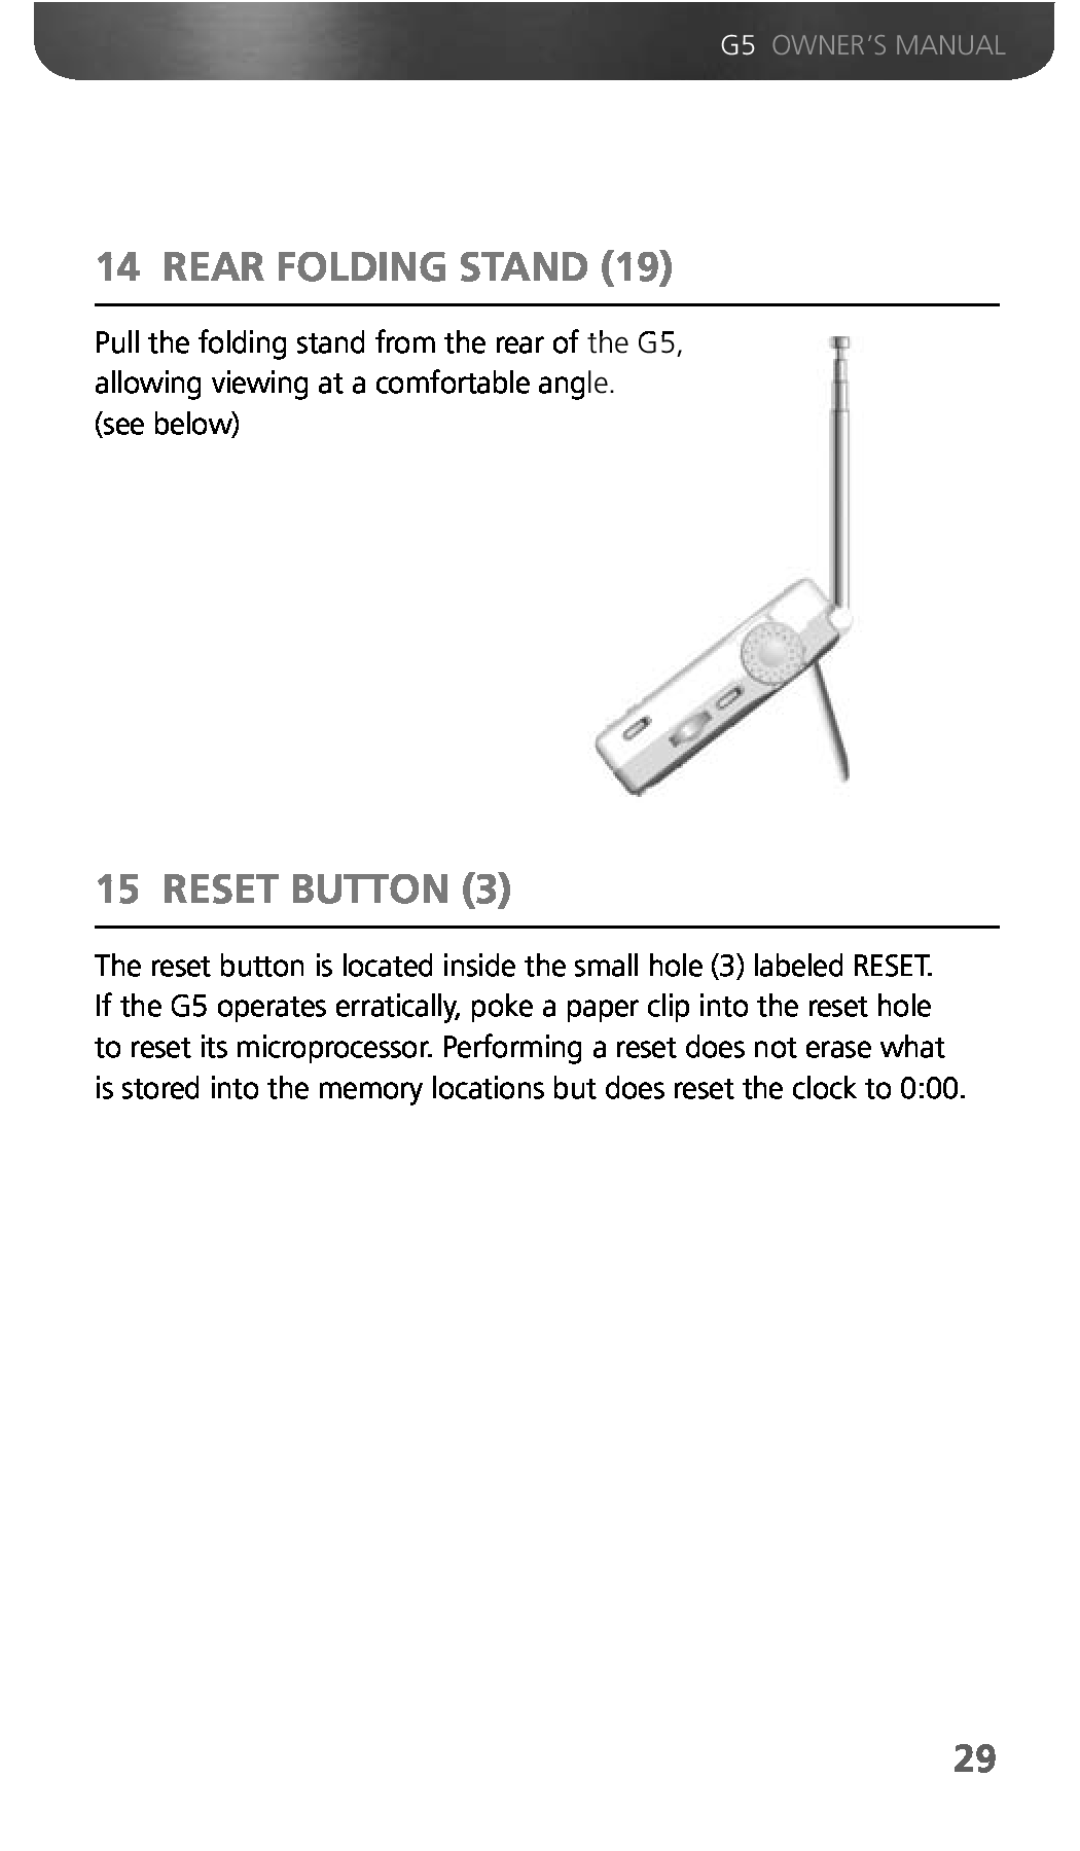 Eton G5 owner manual Rear Folding Stand, Reset Button, see below 